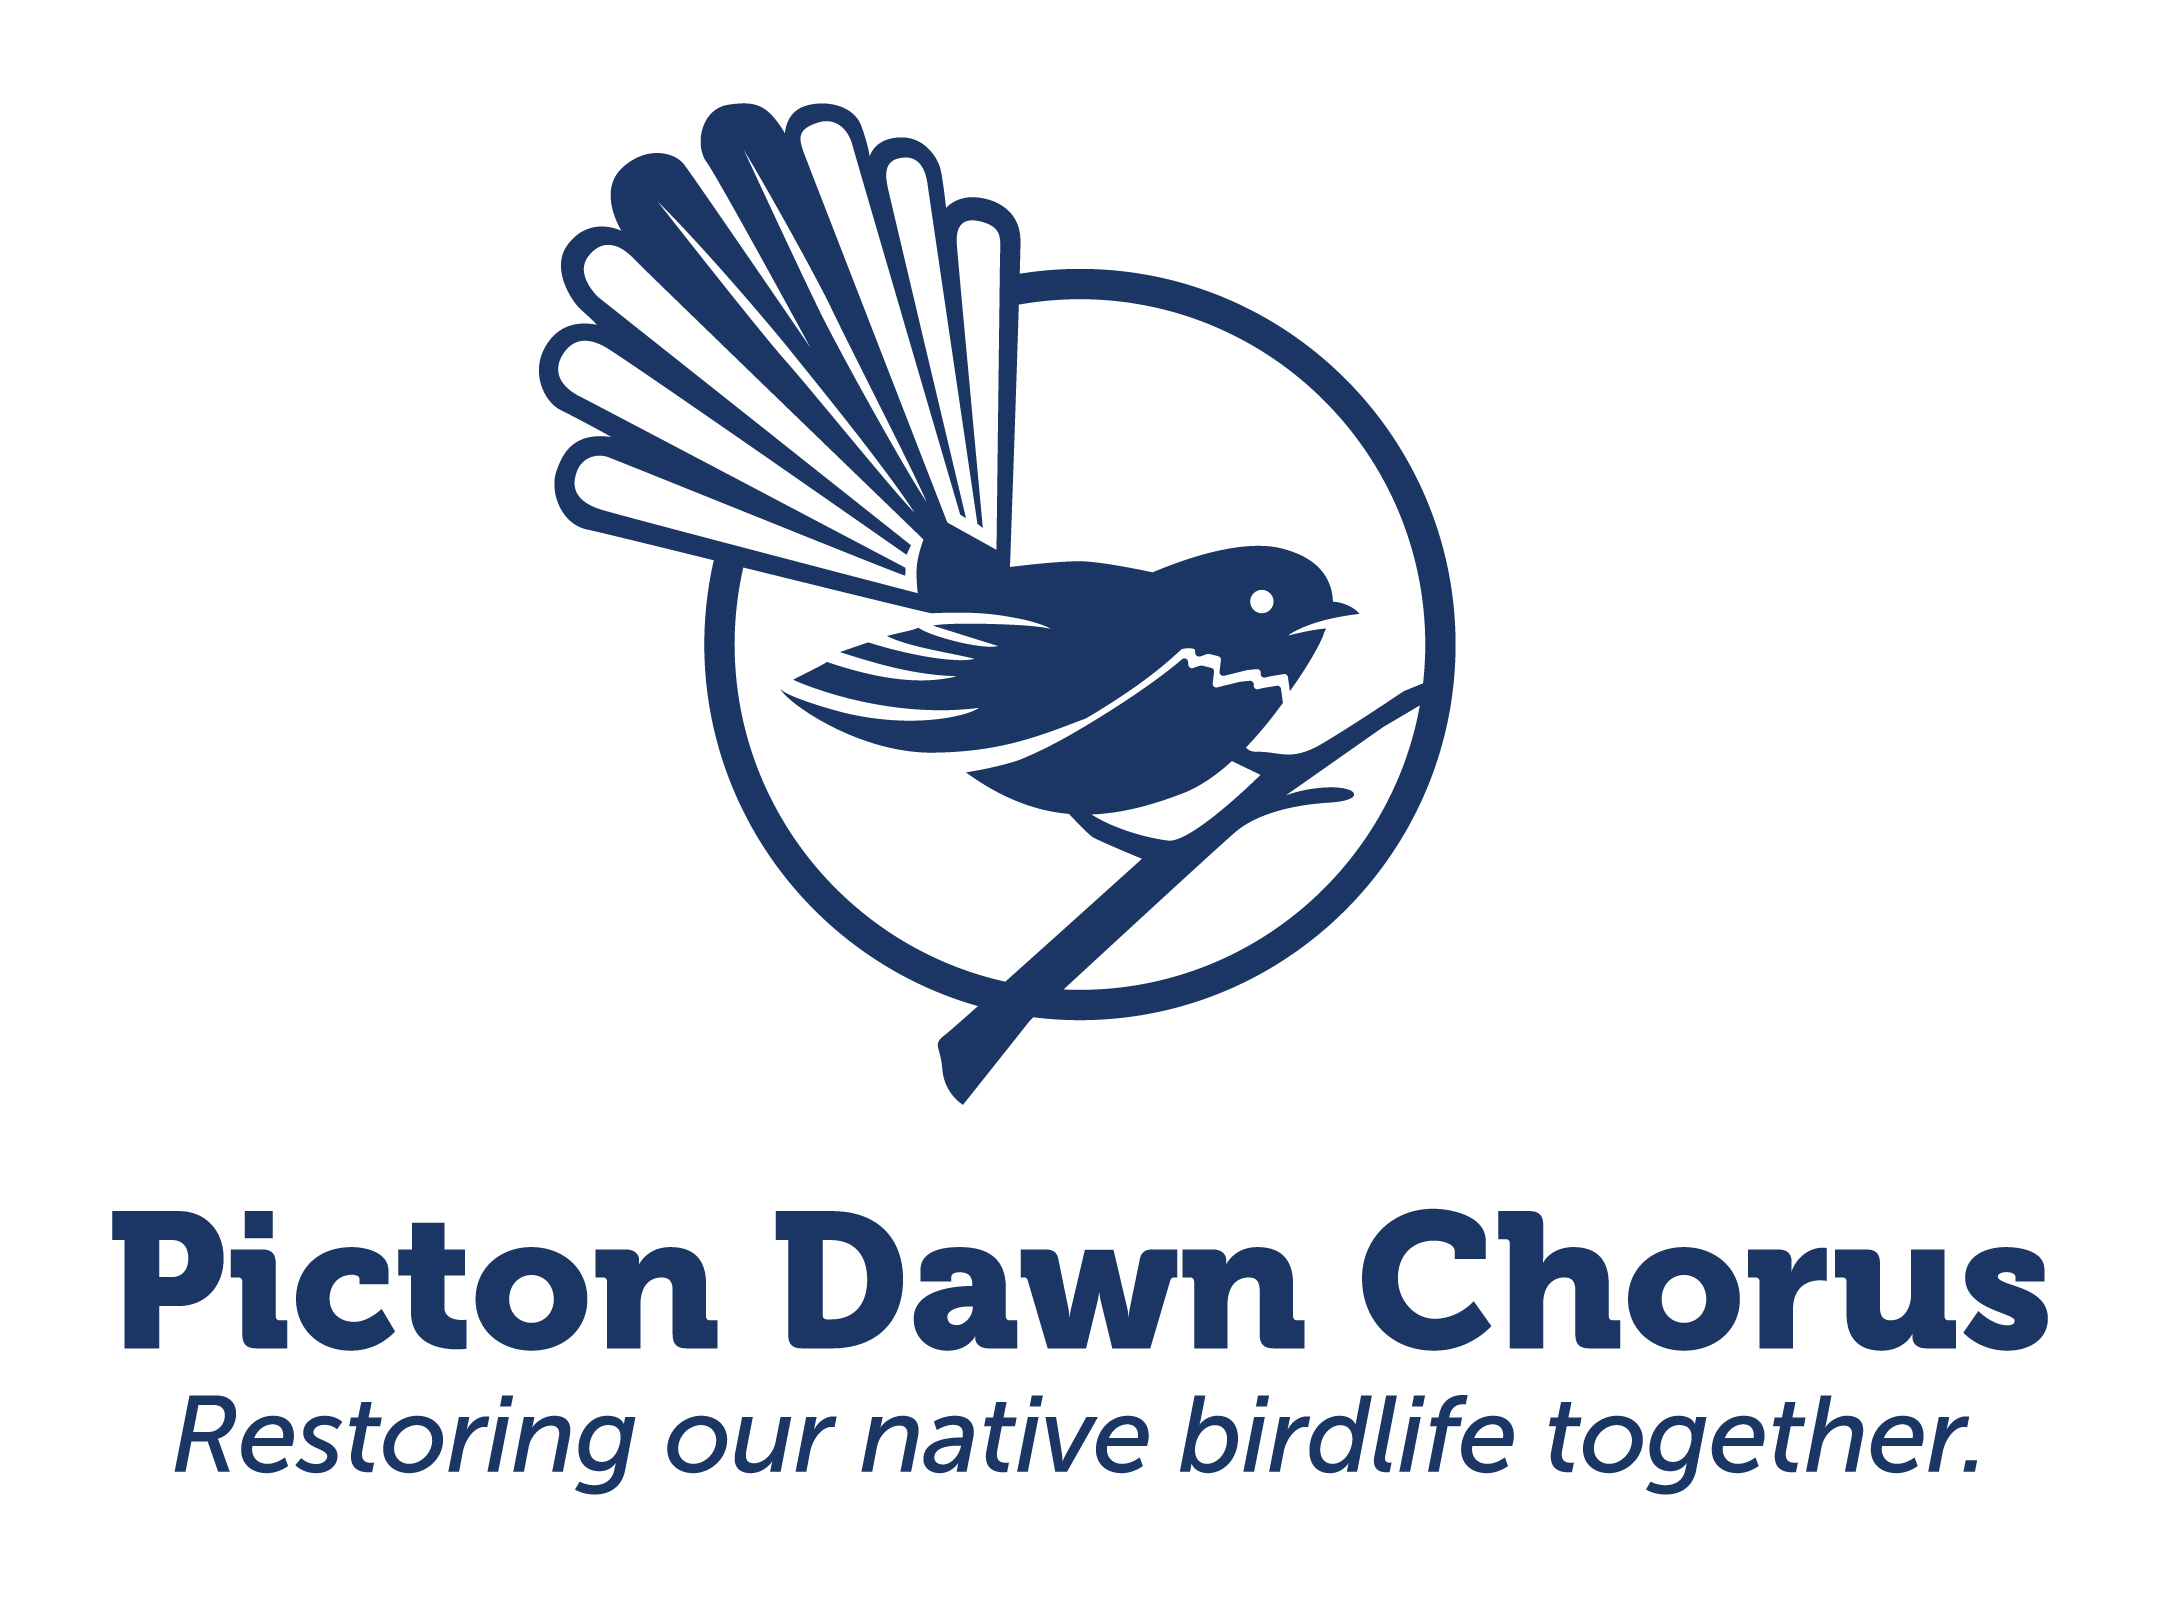 Picton Dawn Chorus logo.